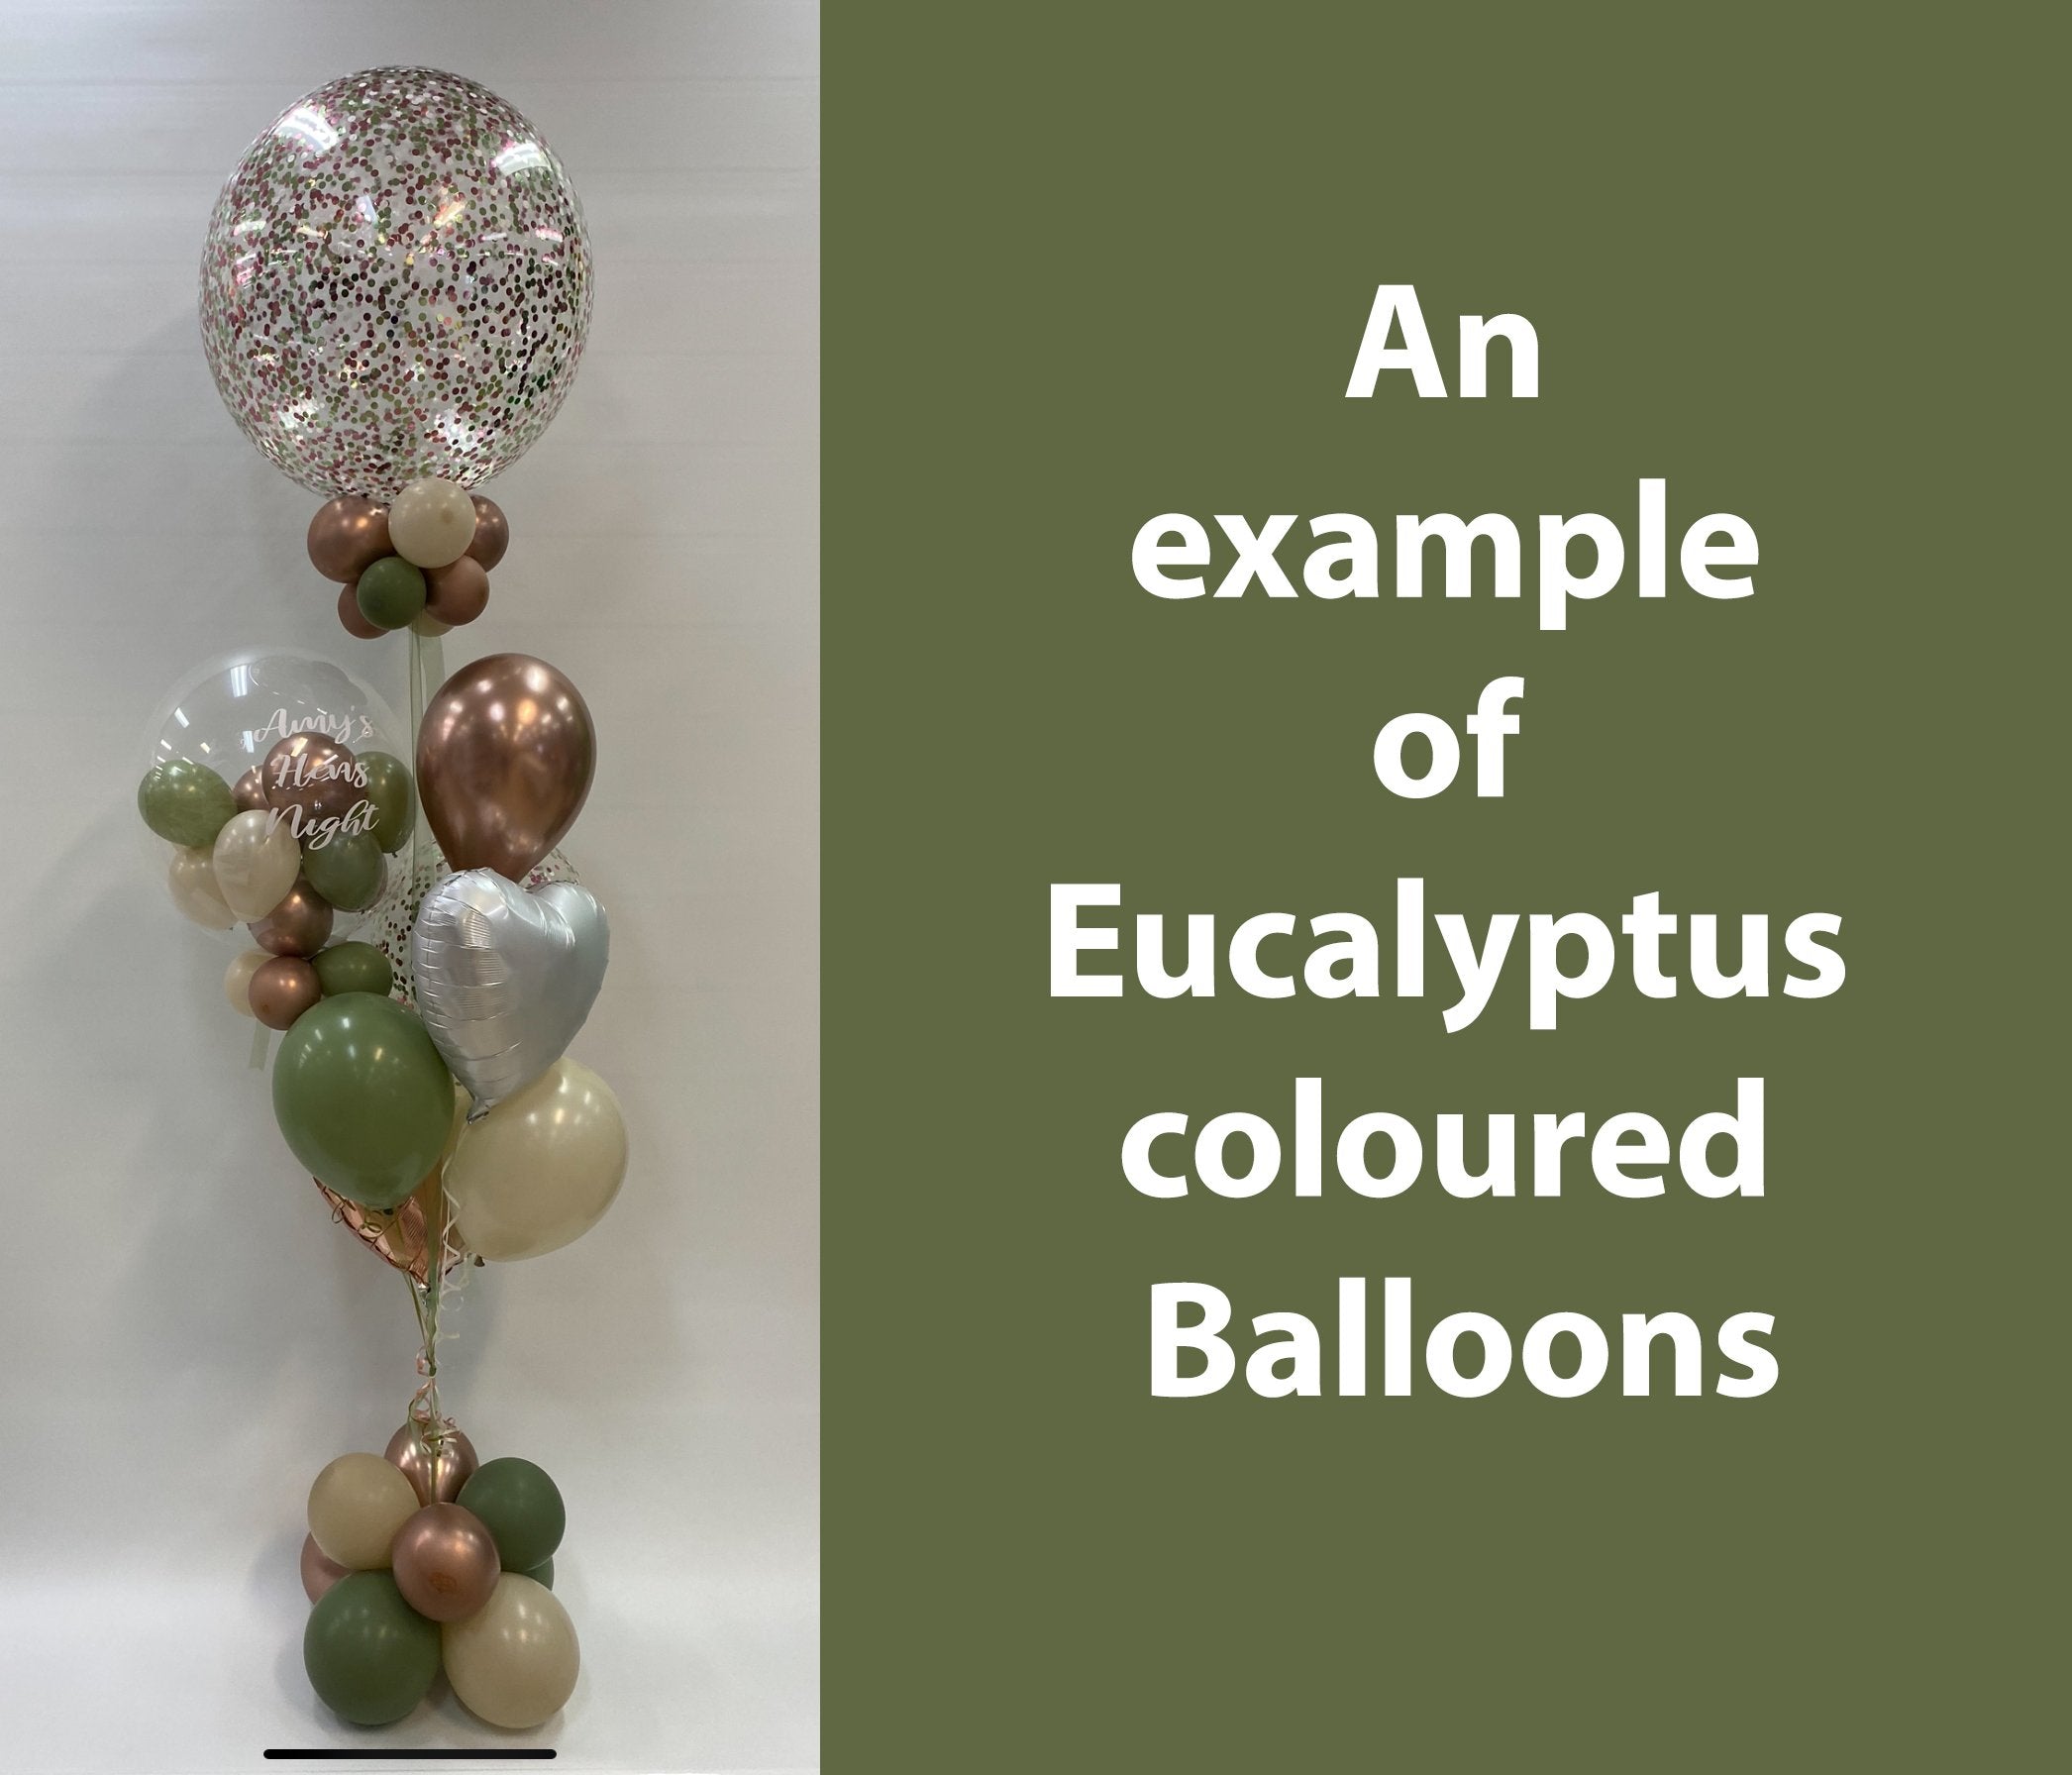 Latex Balloons 30cm Fashion Eucalyptus Pk 100